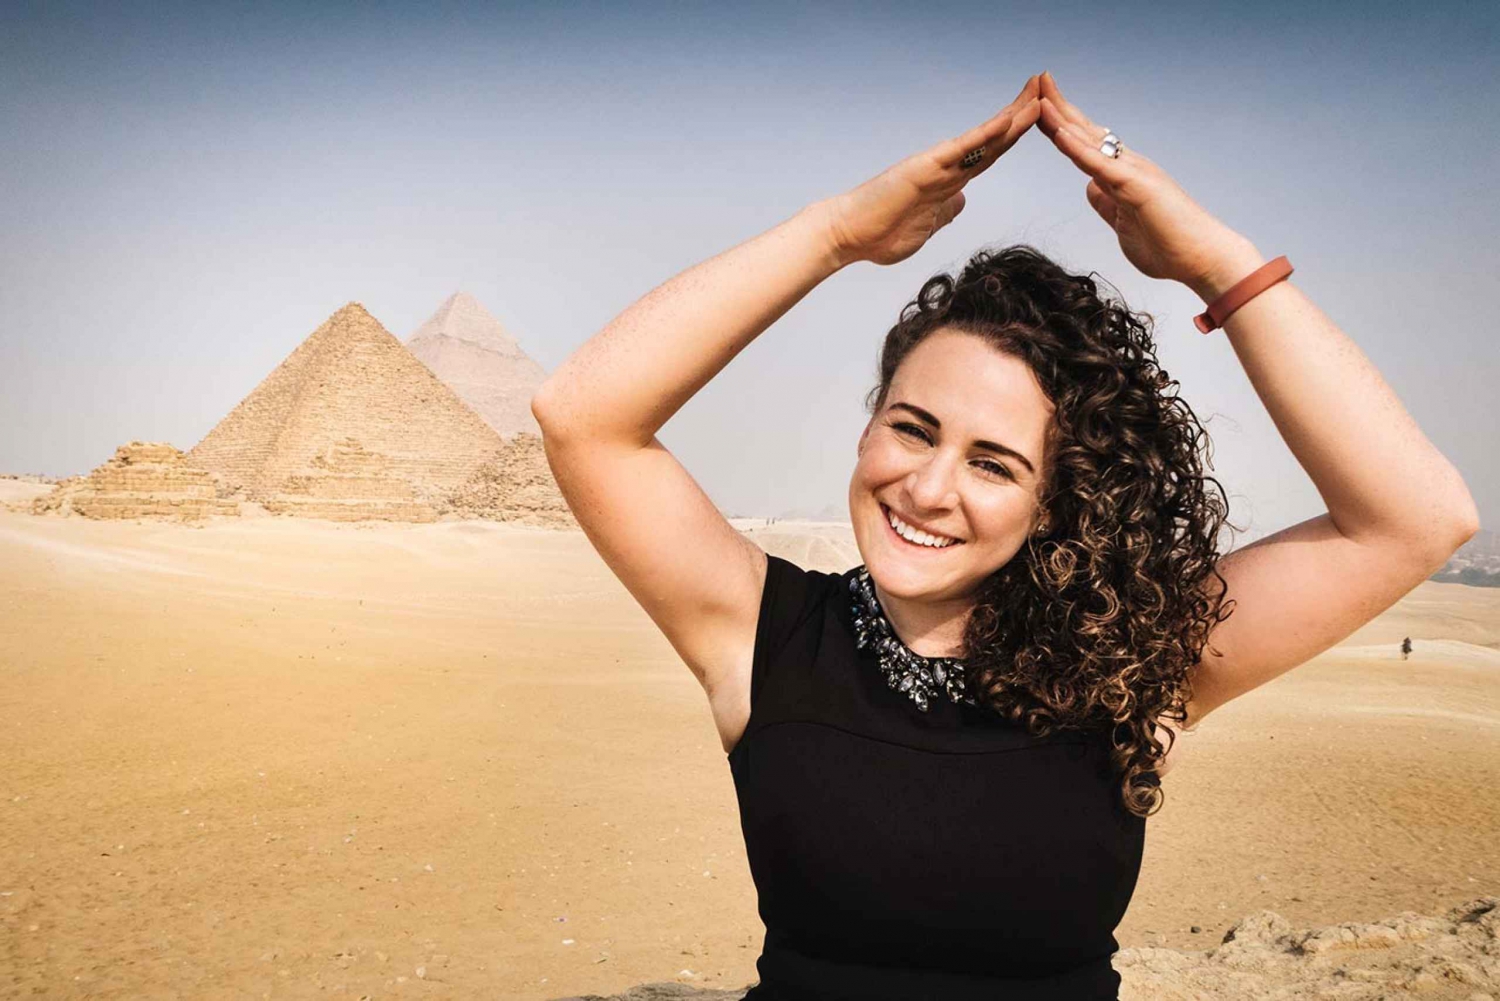 Caïro: dagtour Bezoek piramides, Sfinx, Saqqara en Memphis.